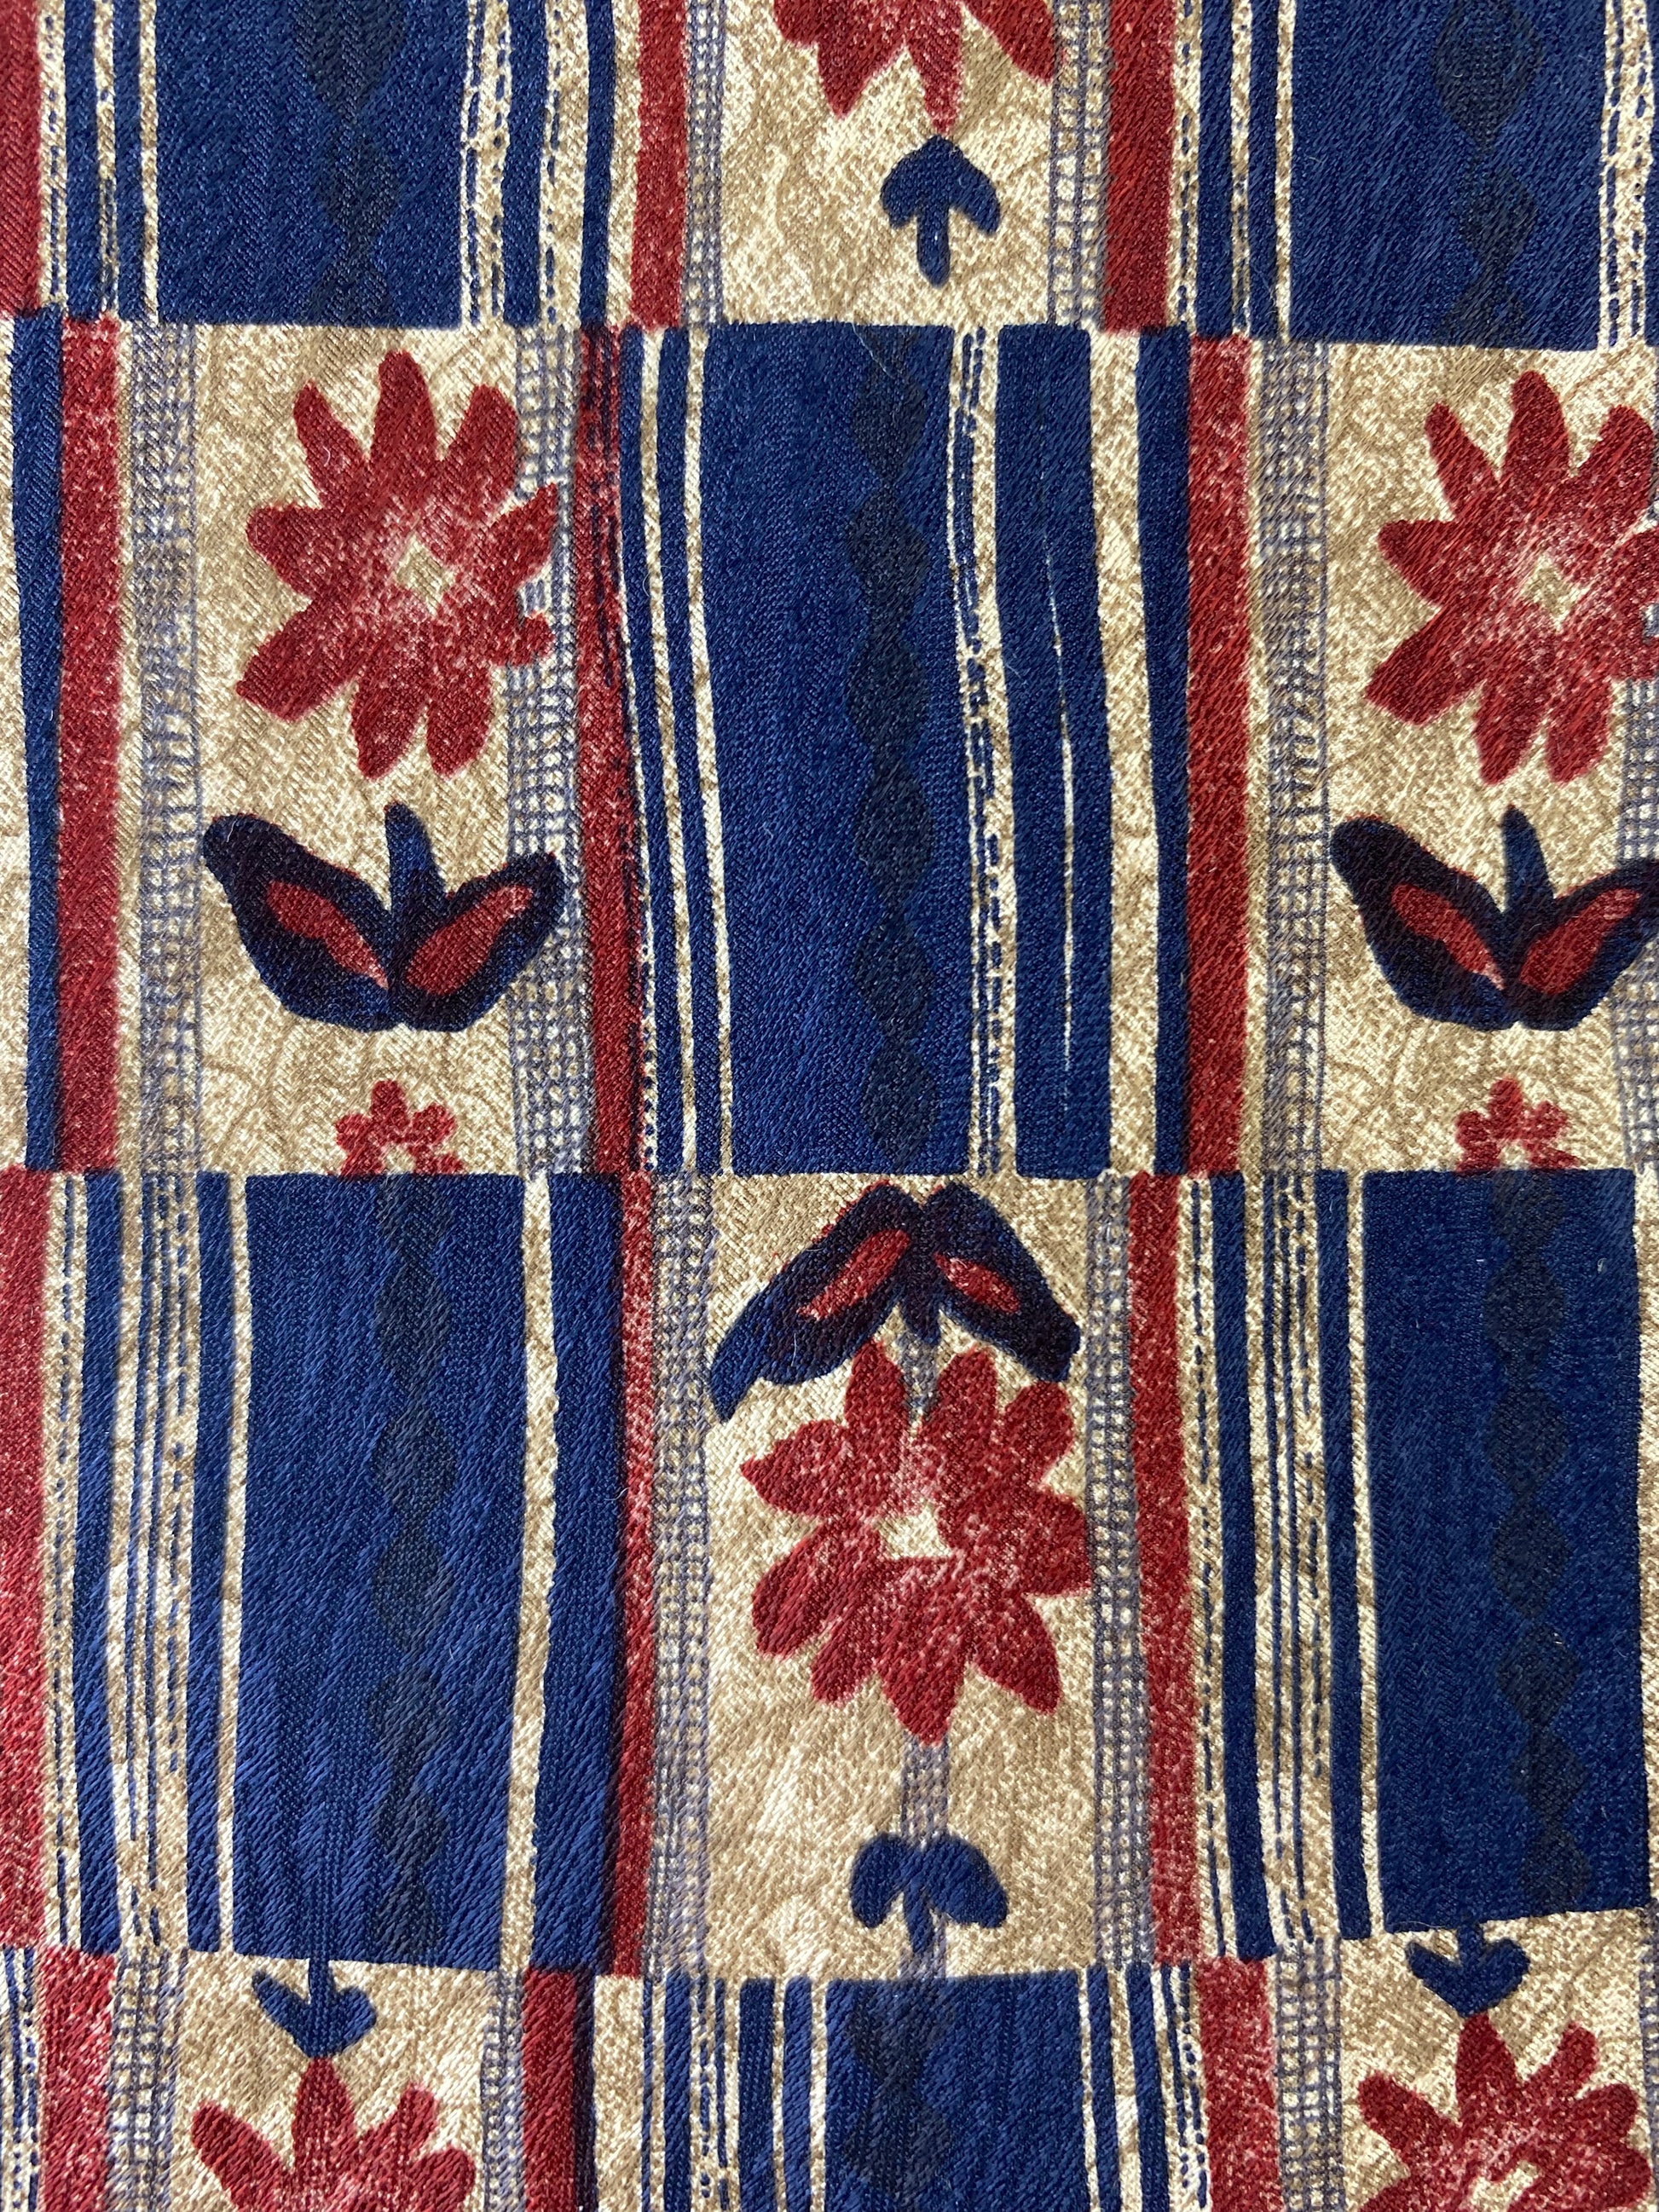 Close-up pattern detail of: 90s Deadstock Silk Necktie, Men's Vintage Blue Red Floral Pattern Tie, NOS